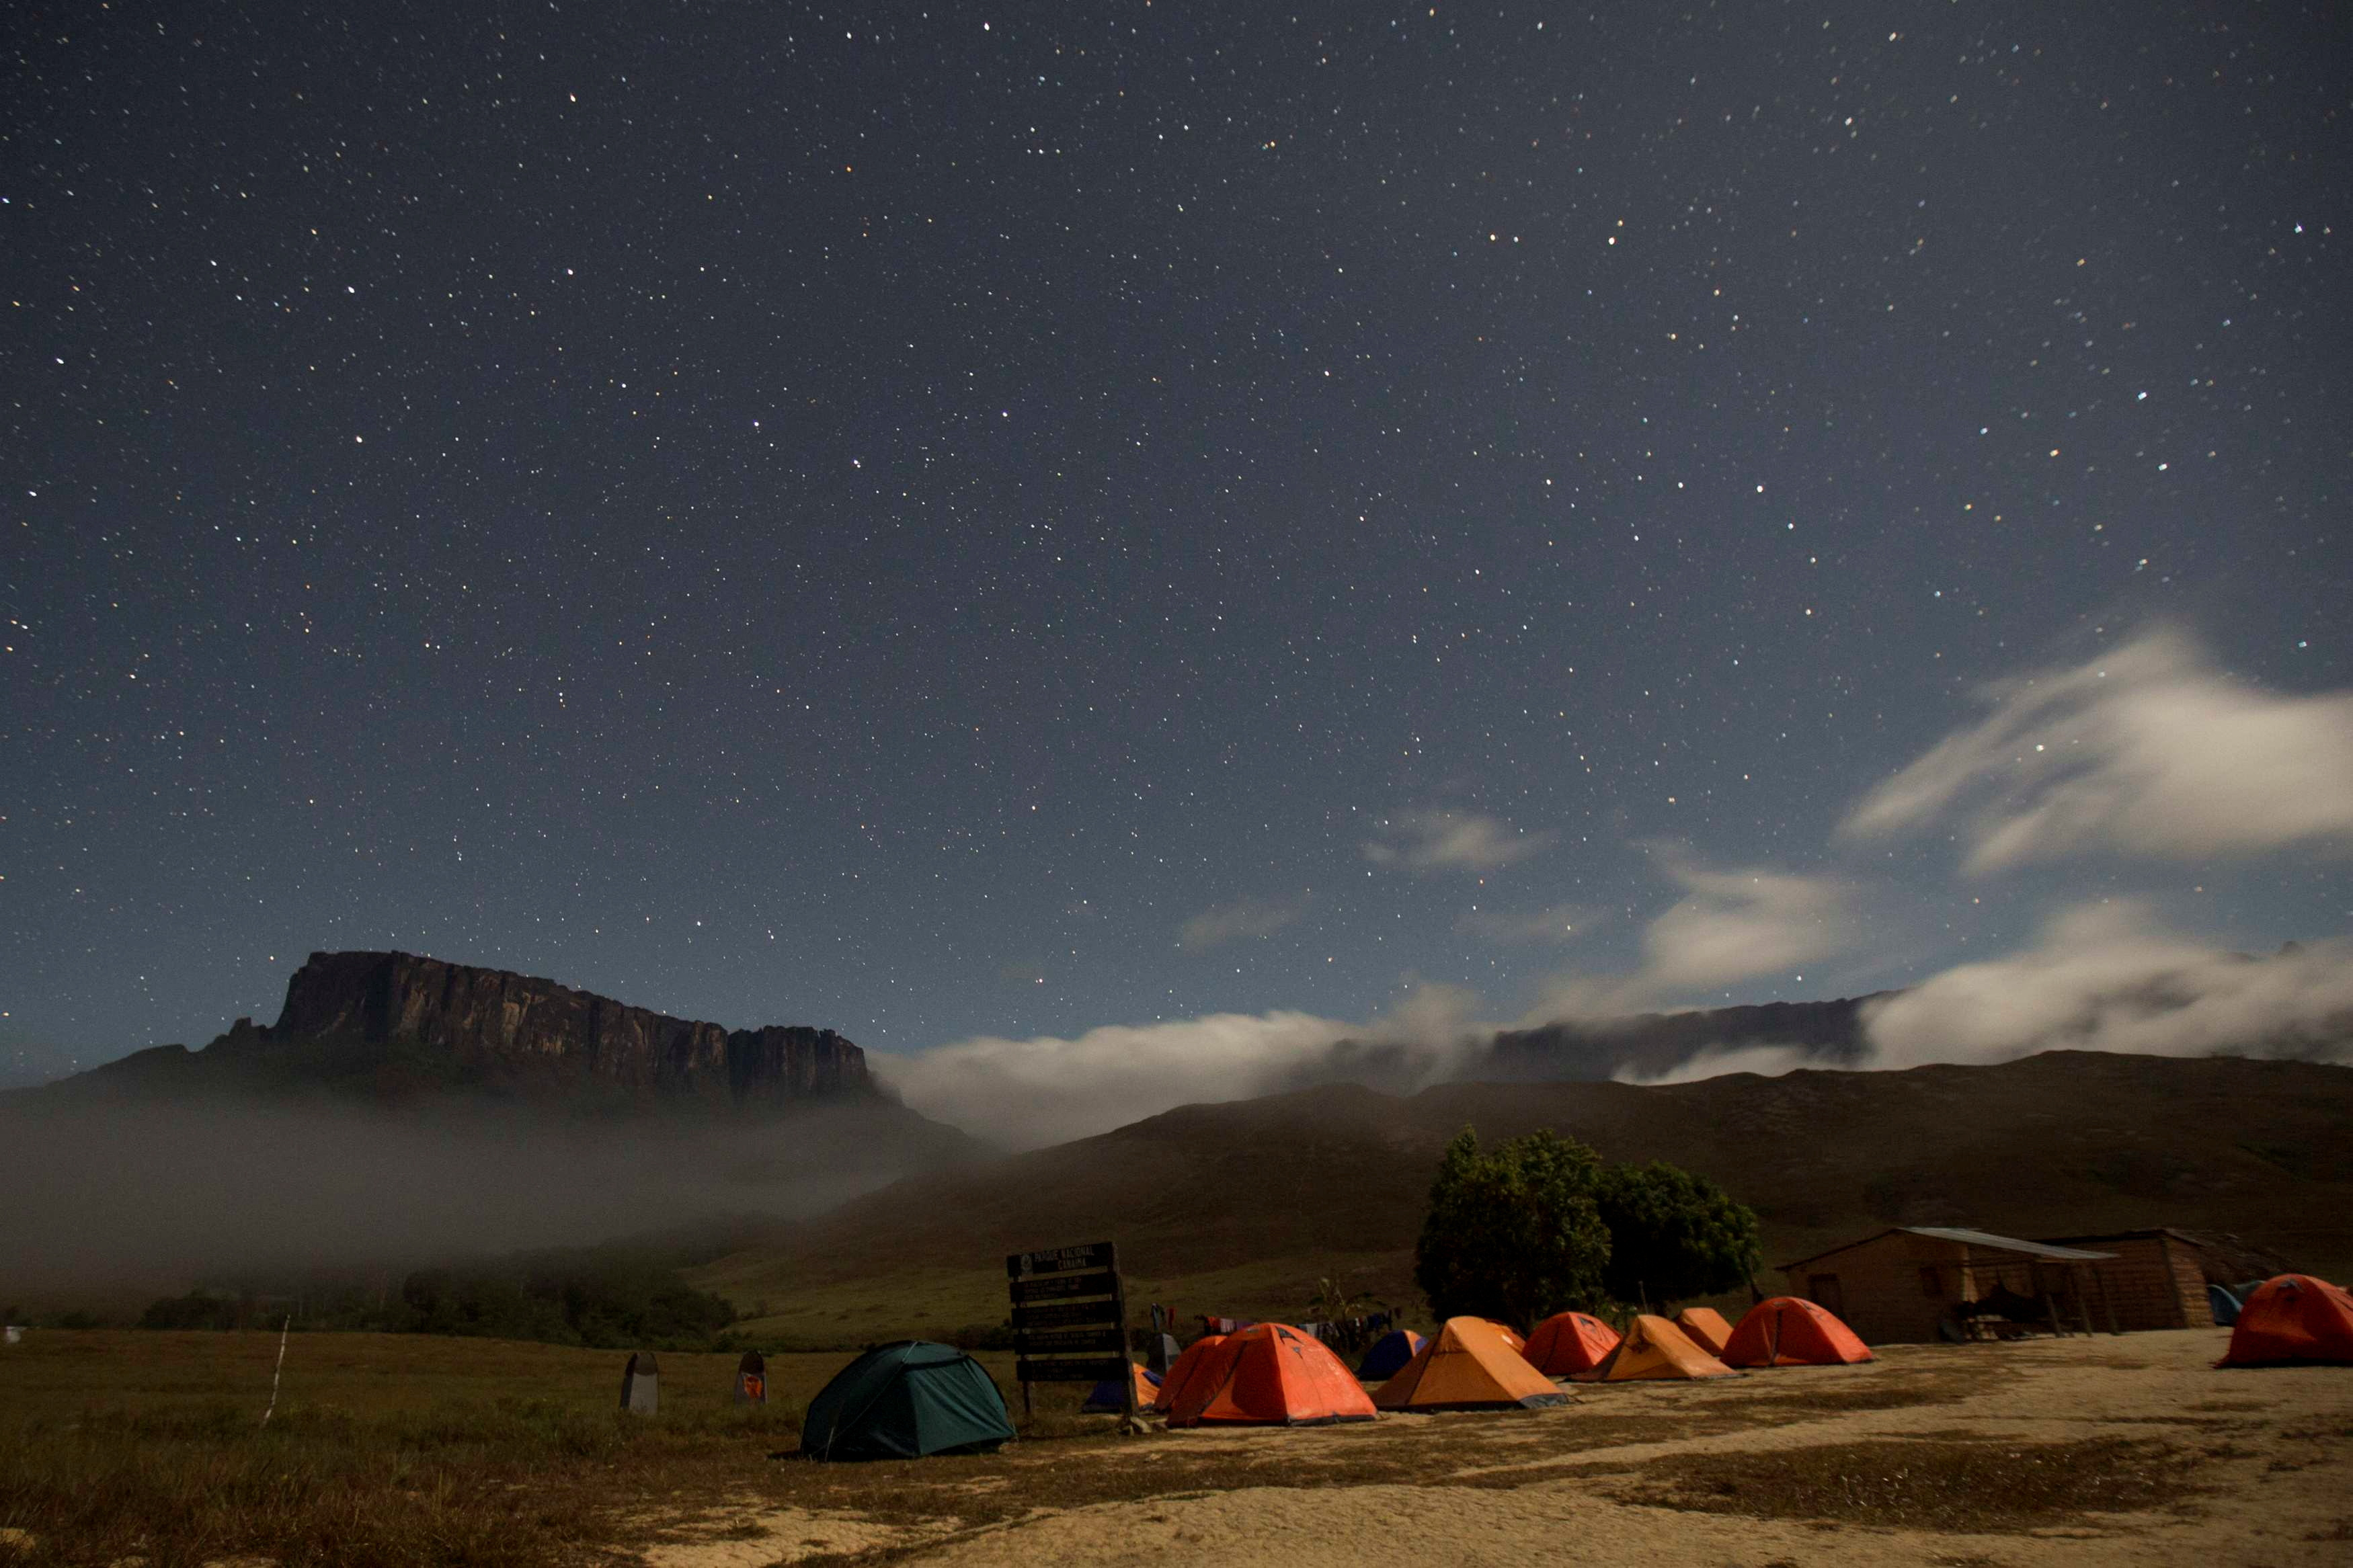 Kukenan and Roraima mounts are seen from the Tec Camp, near Venezuela's border with Brazil